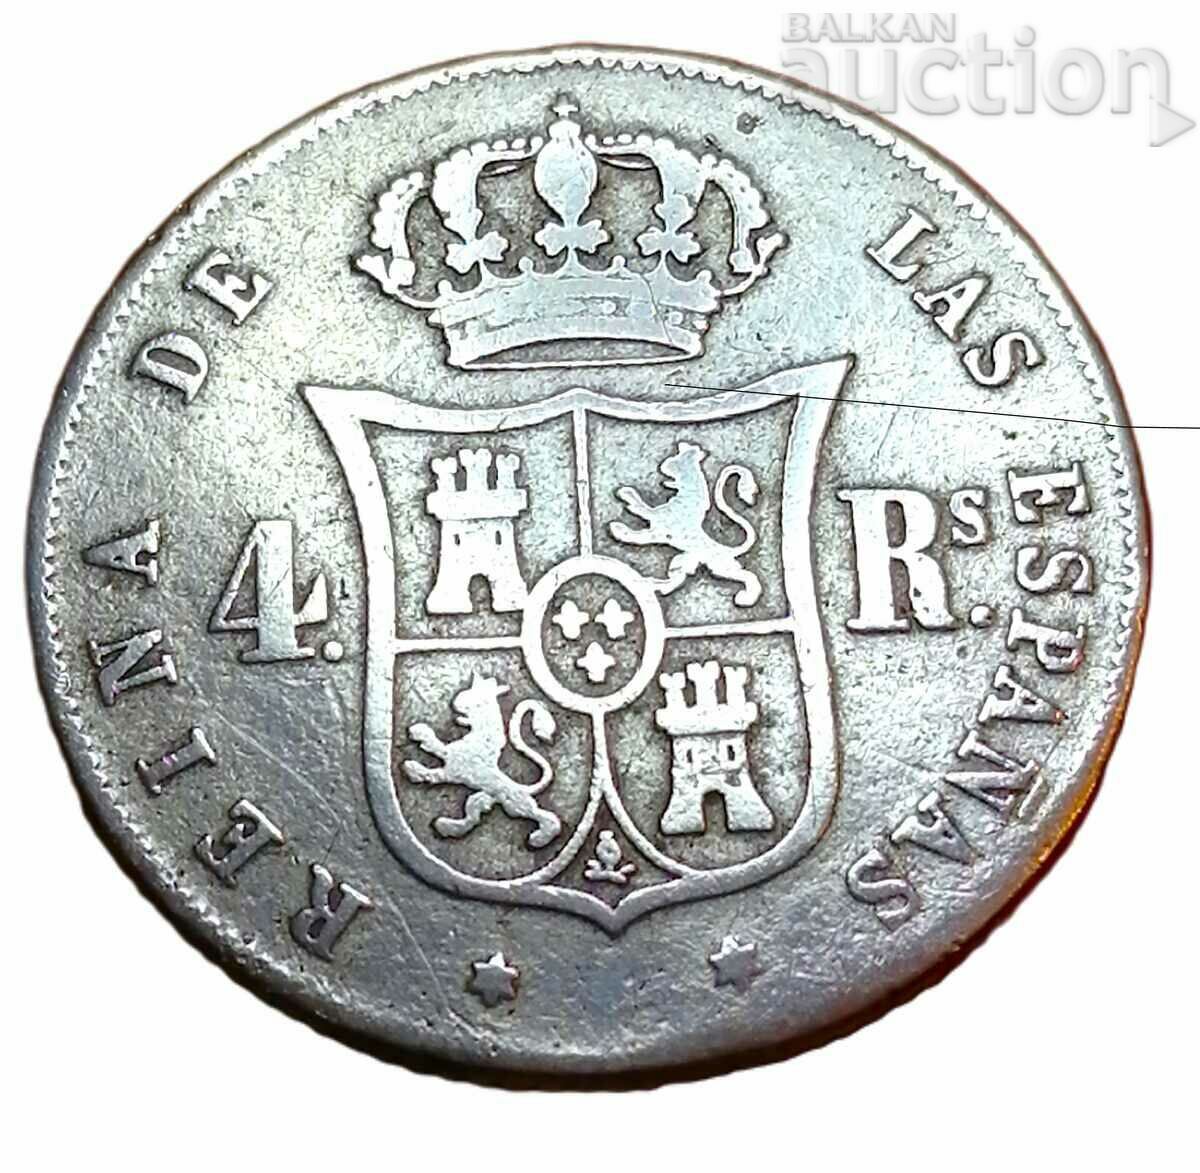 4 Reales 1862, Ισπανία - Isabel II, σπάνια χρονιά.